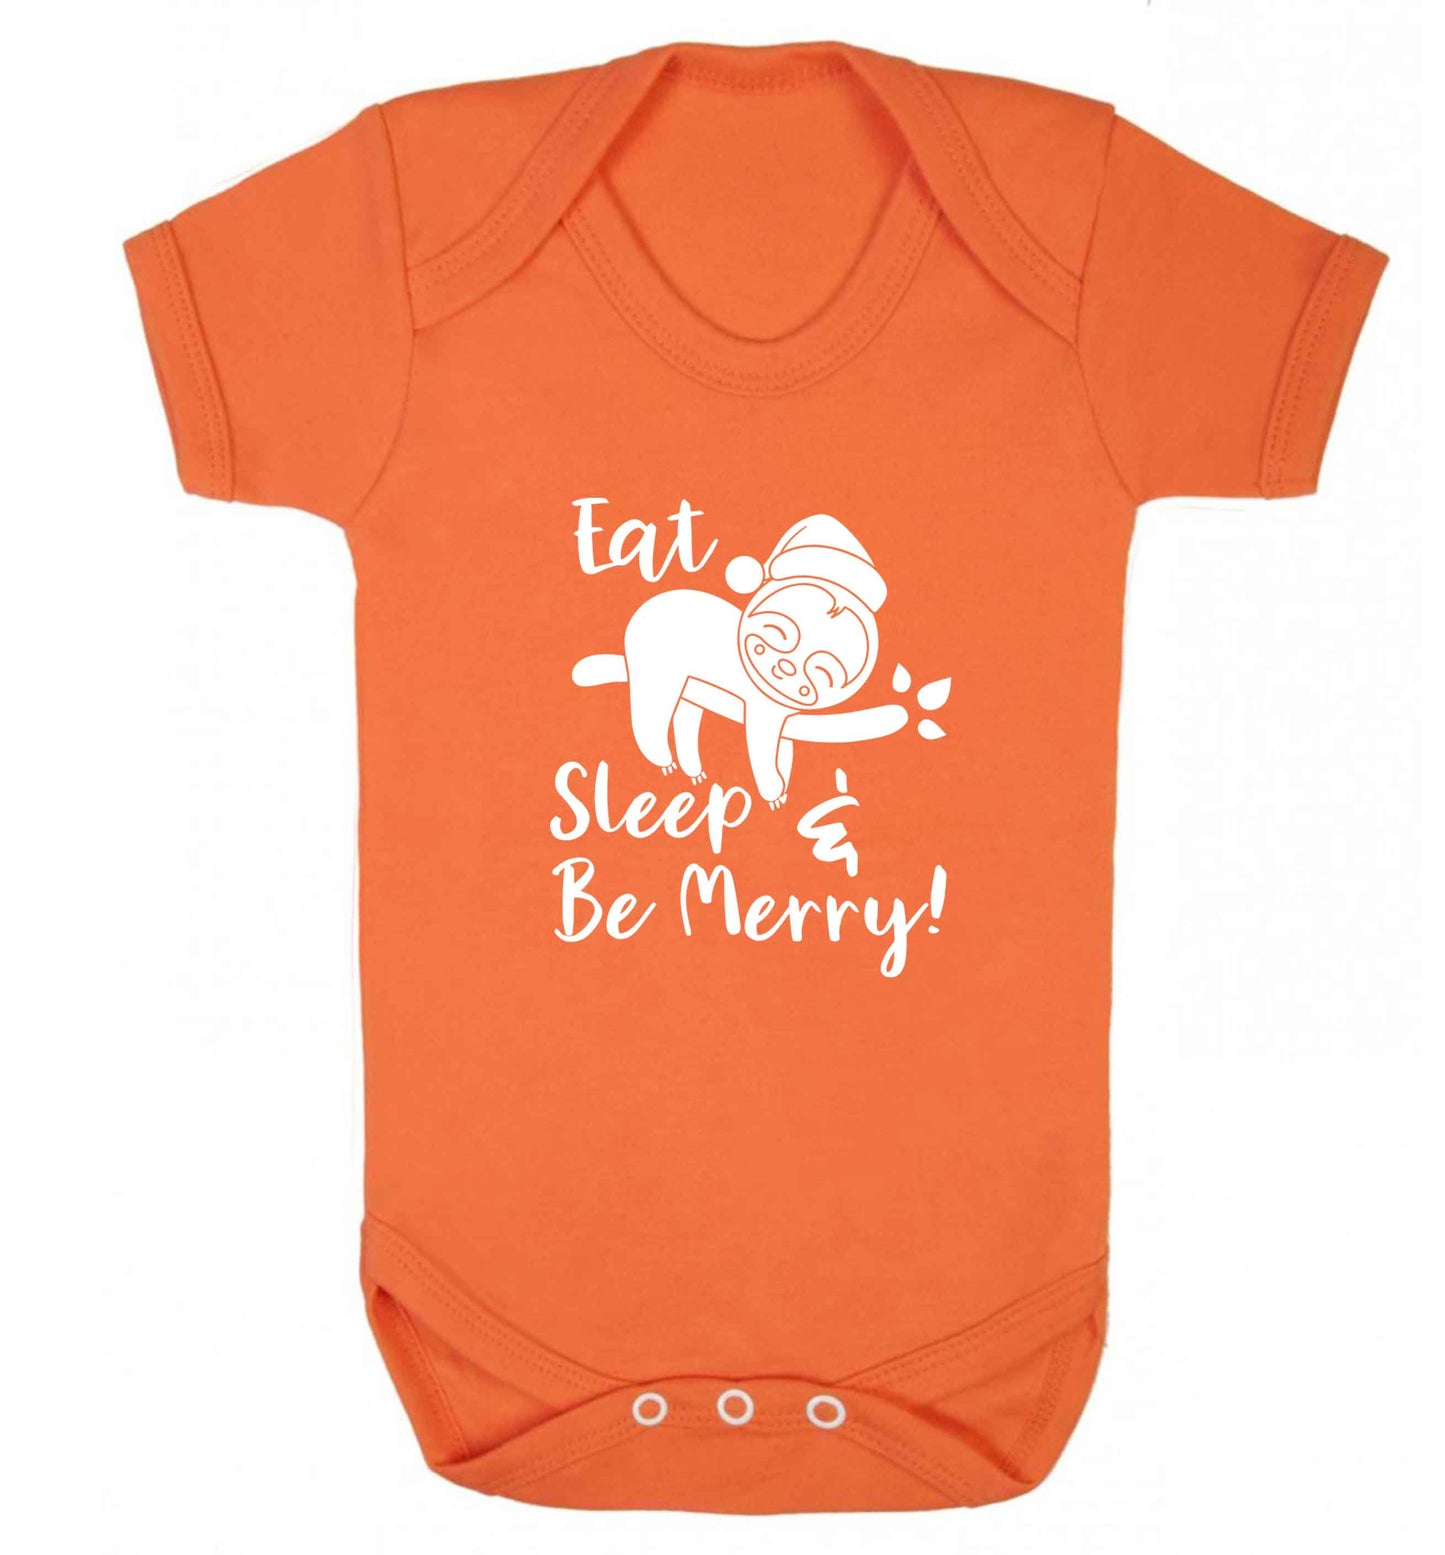 Merry Slothmas baby vest orange 18-24 months